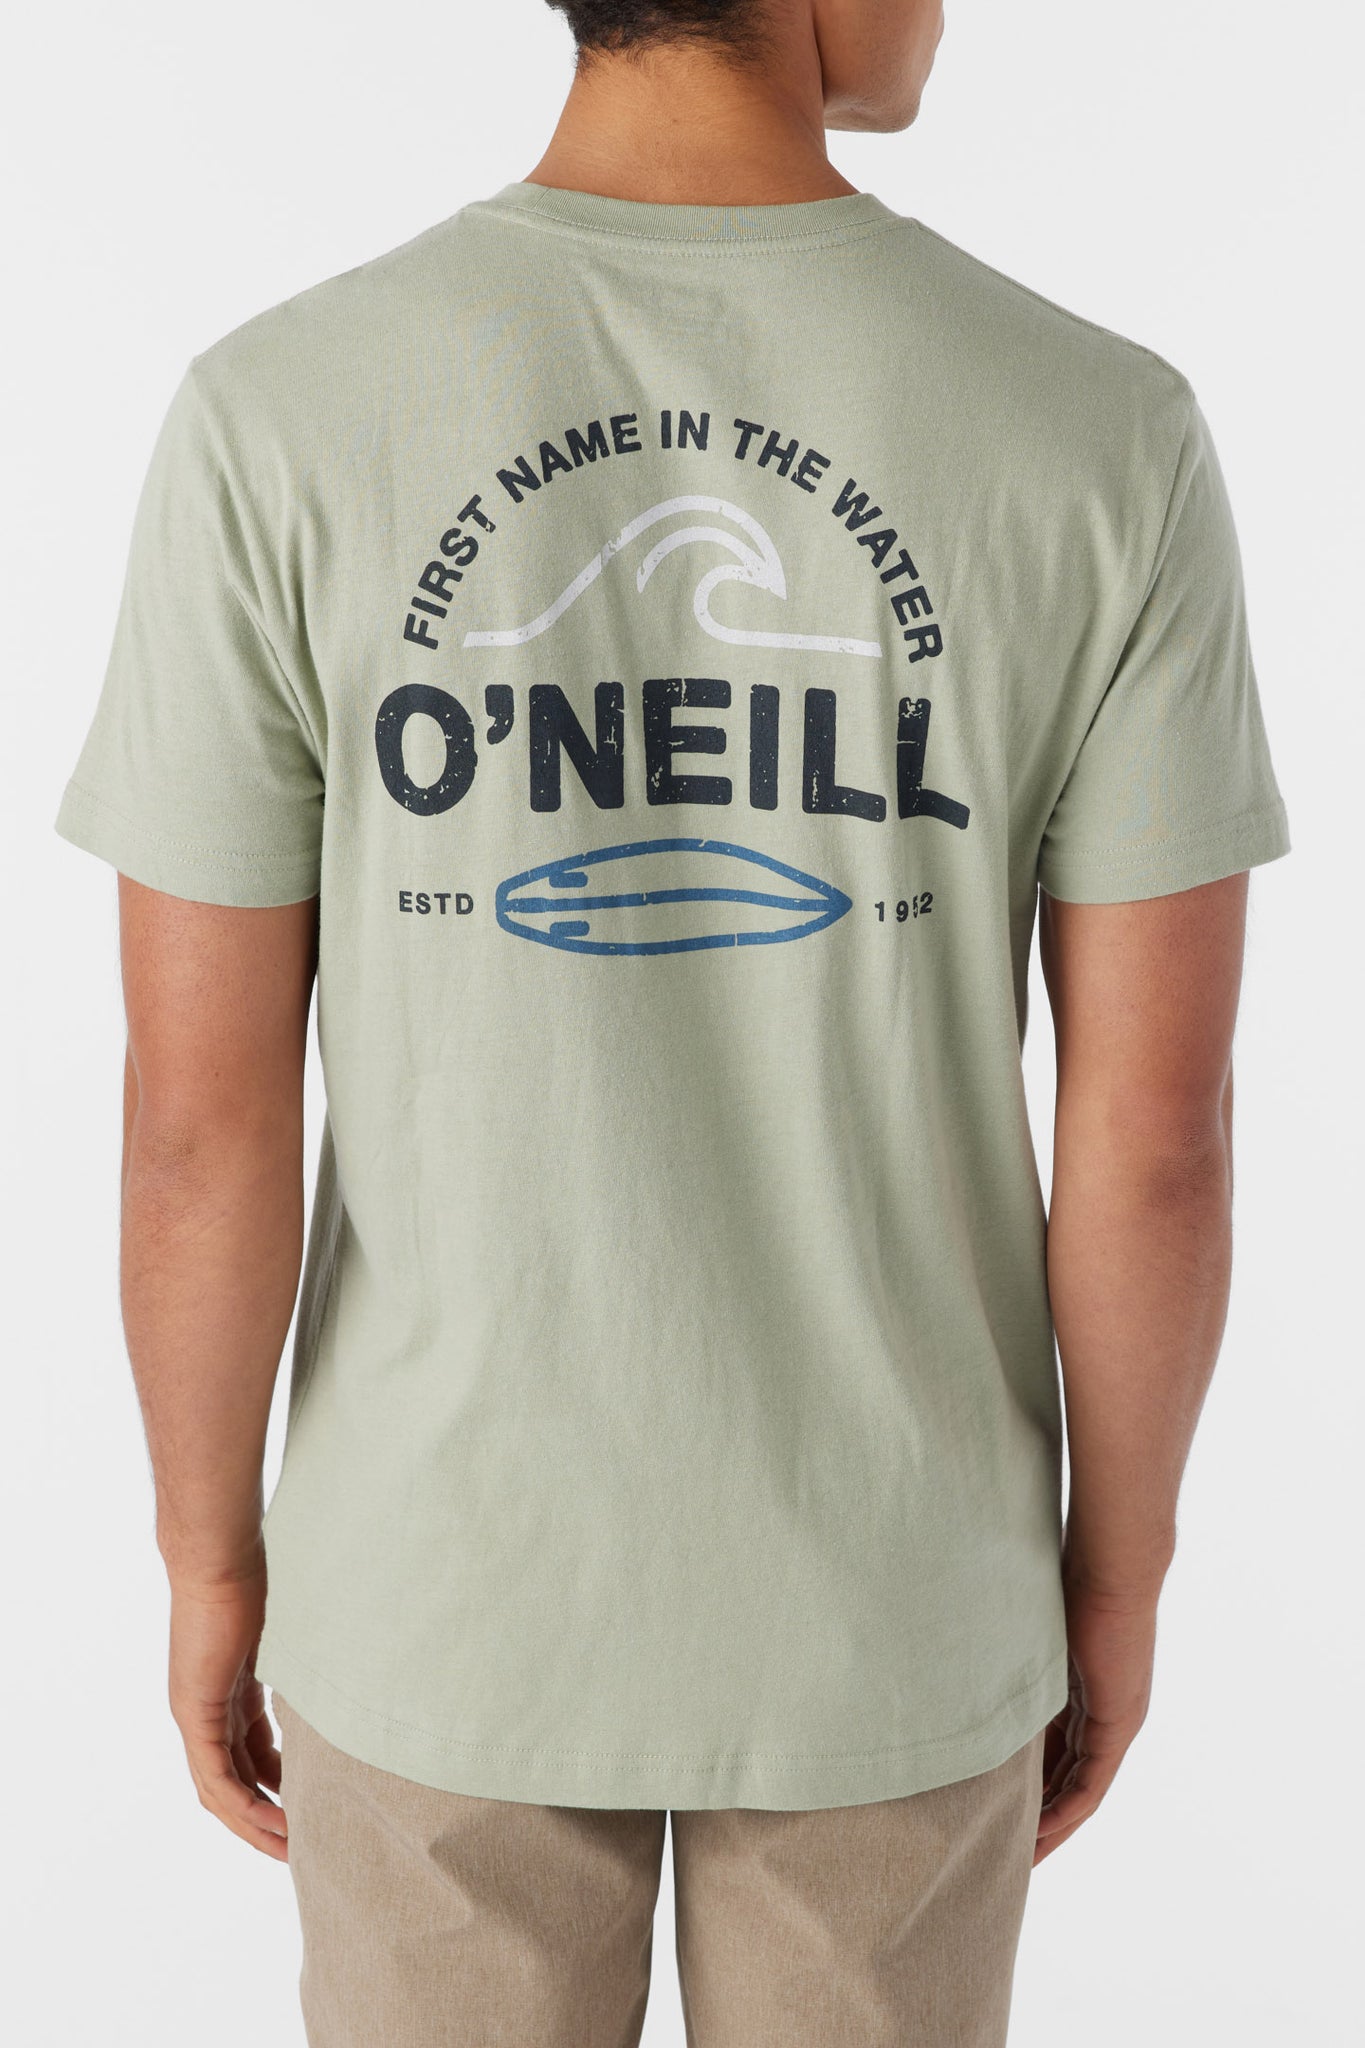 O'Neill Men's Rip Tide T-Shirt in Seagrass, Size Medium